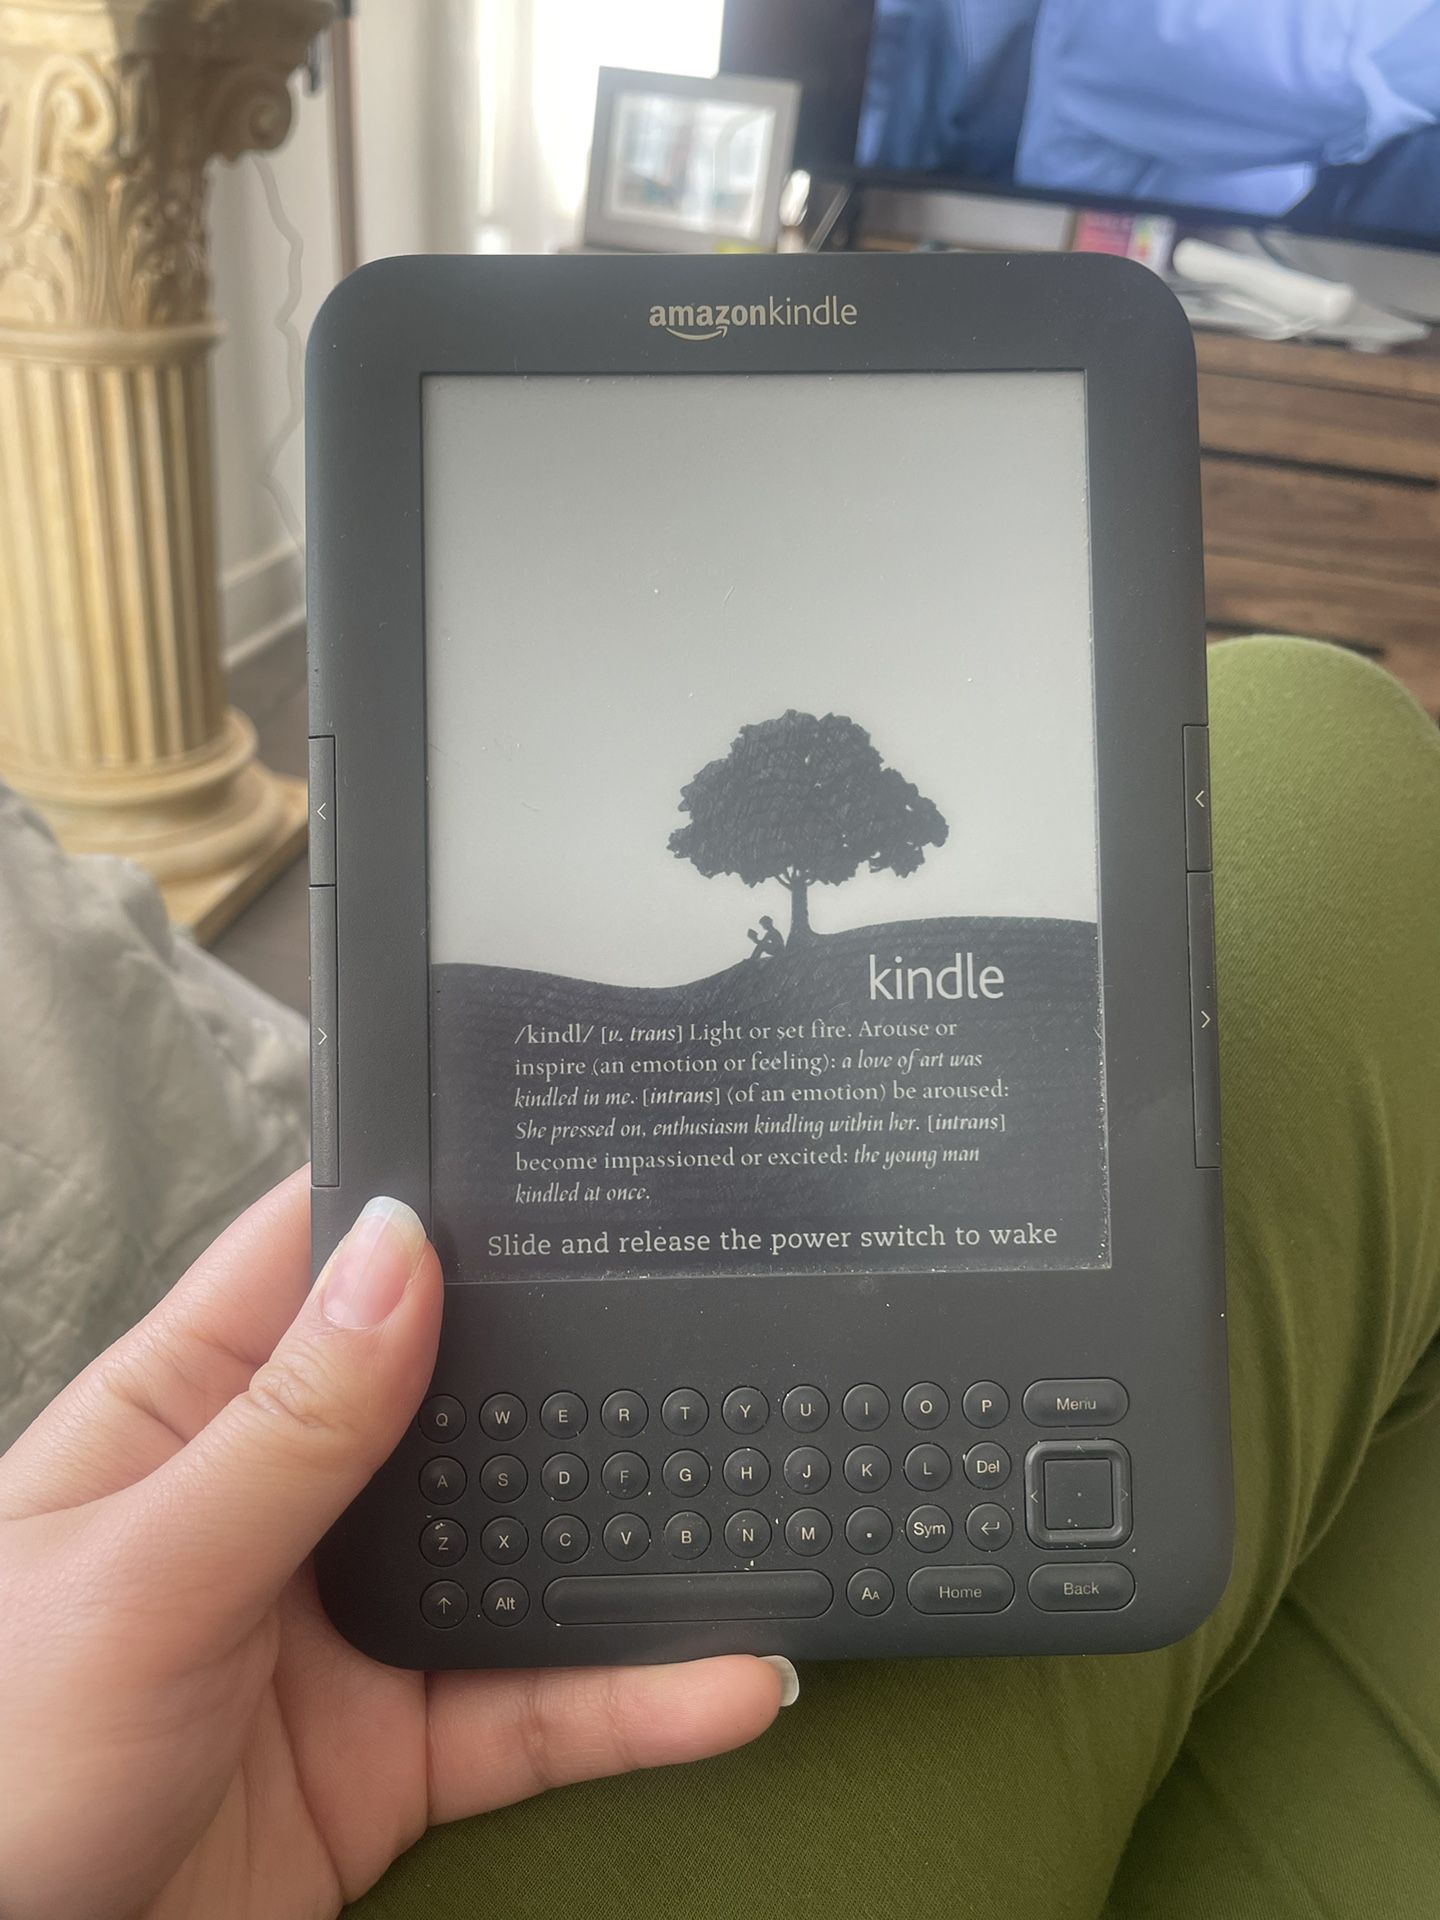 Second Generation Kindle